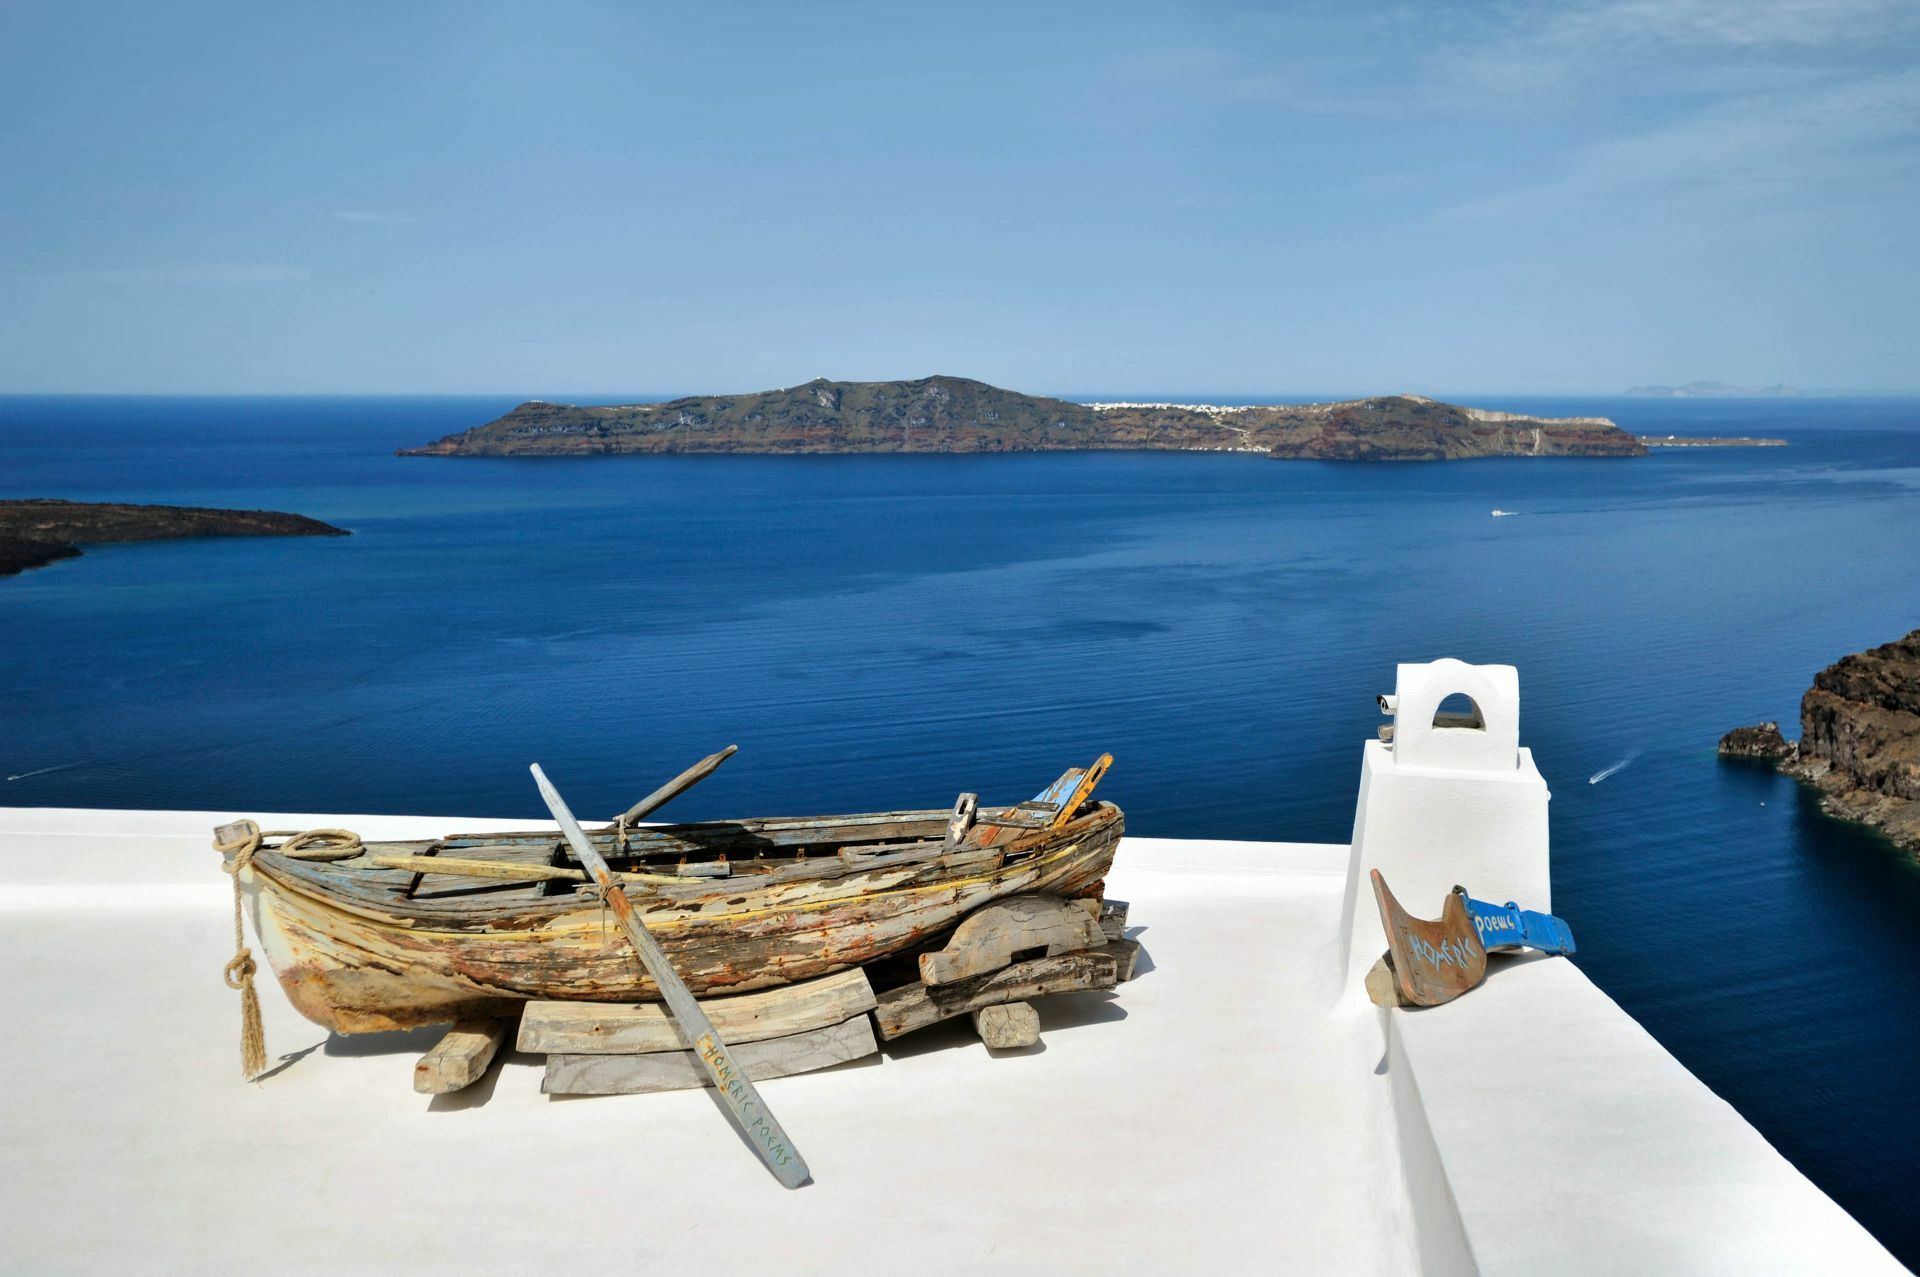 Santorini, the most popular island in Greece